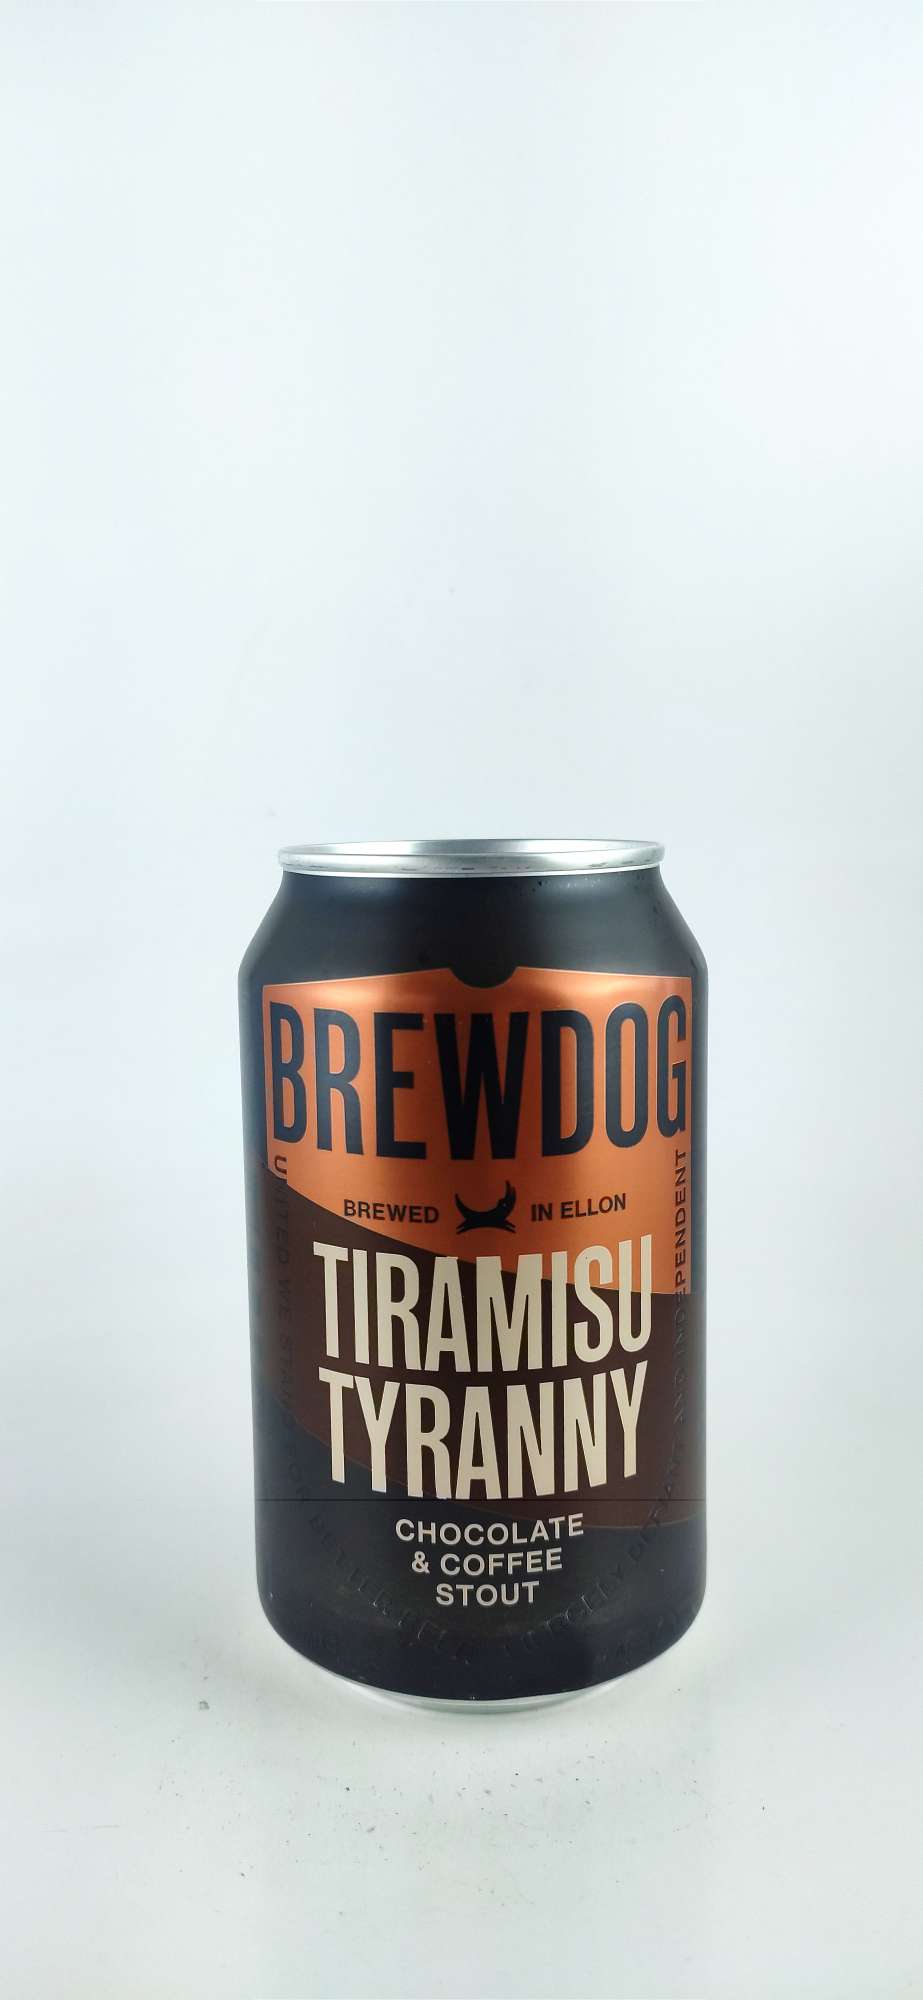 BrewDog Tiramisu Tyranny Double Coffee Imperial Stout